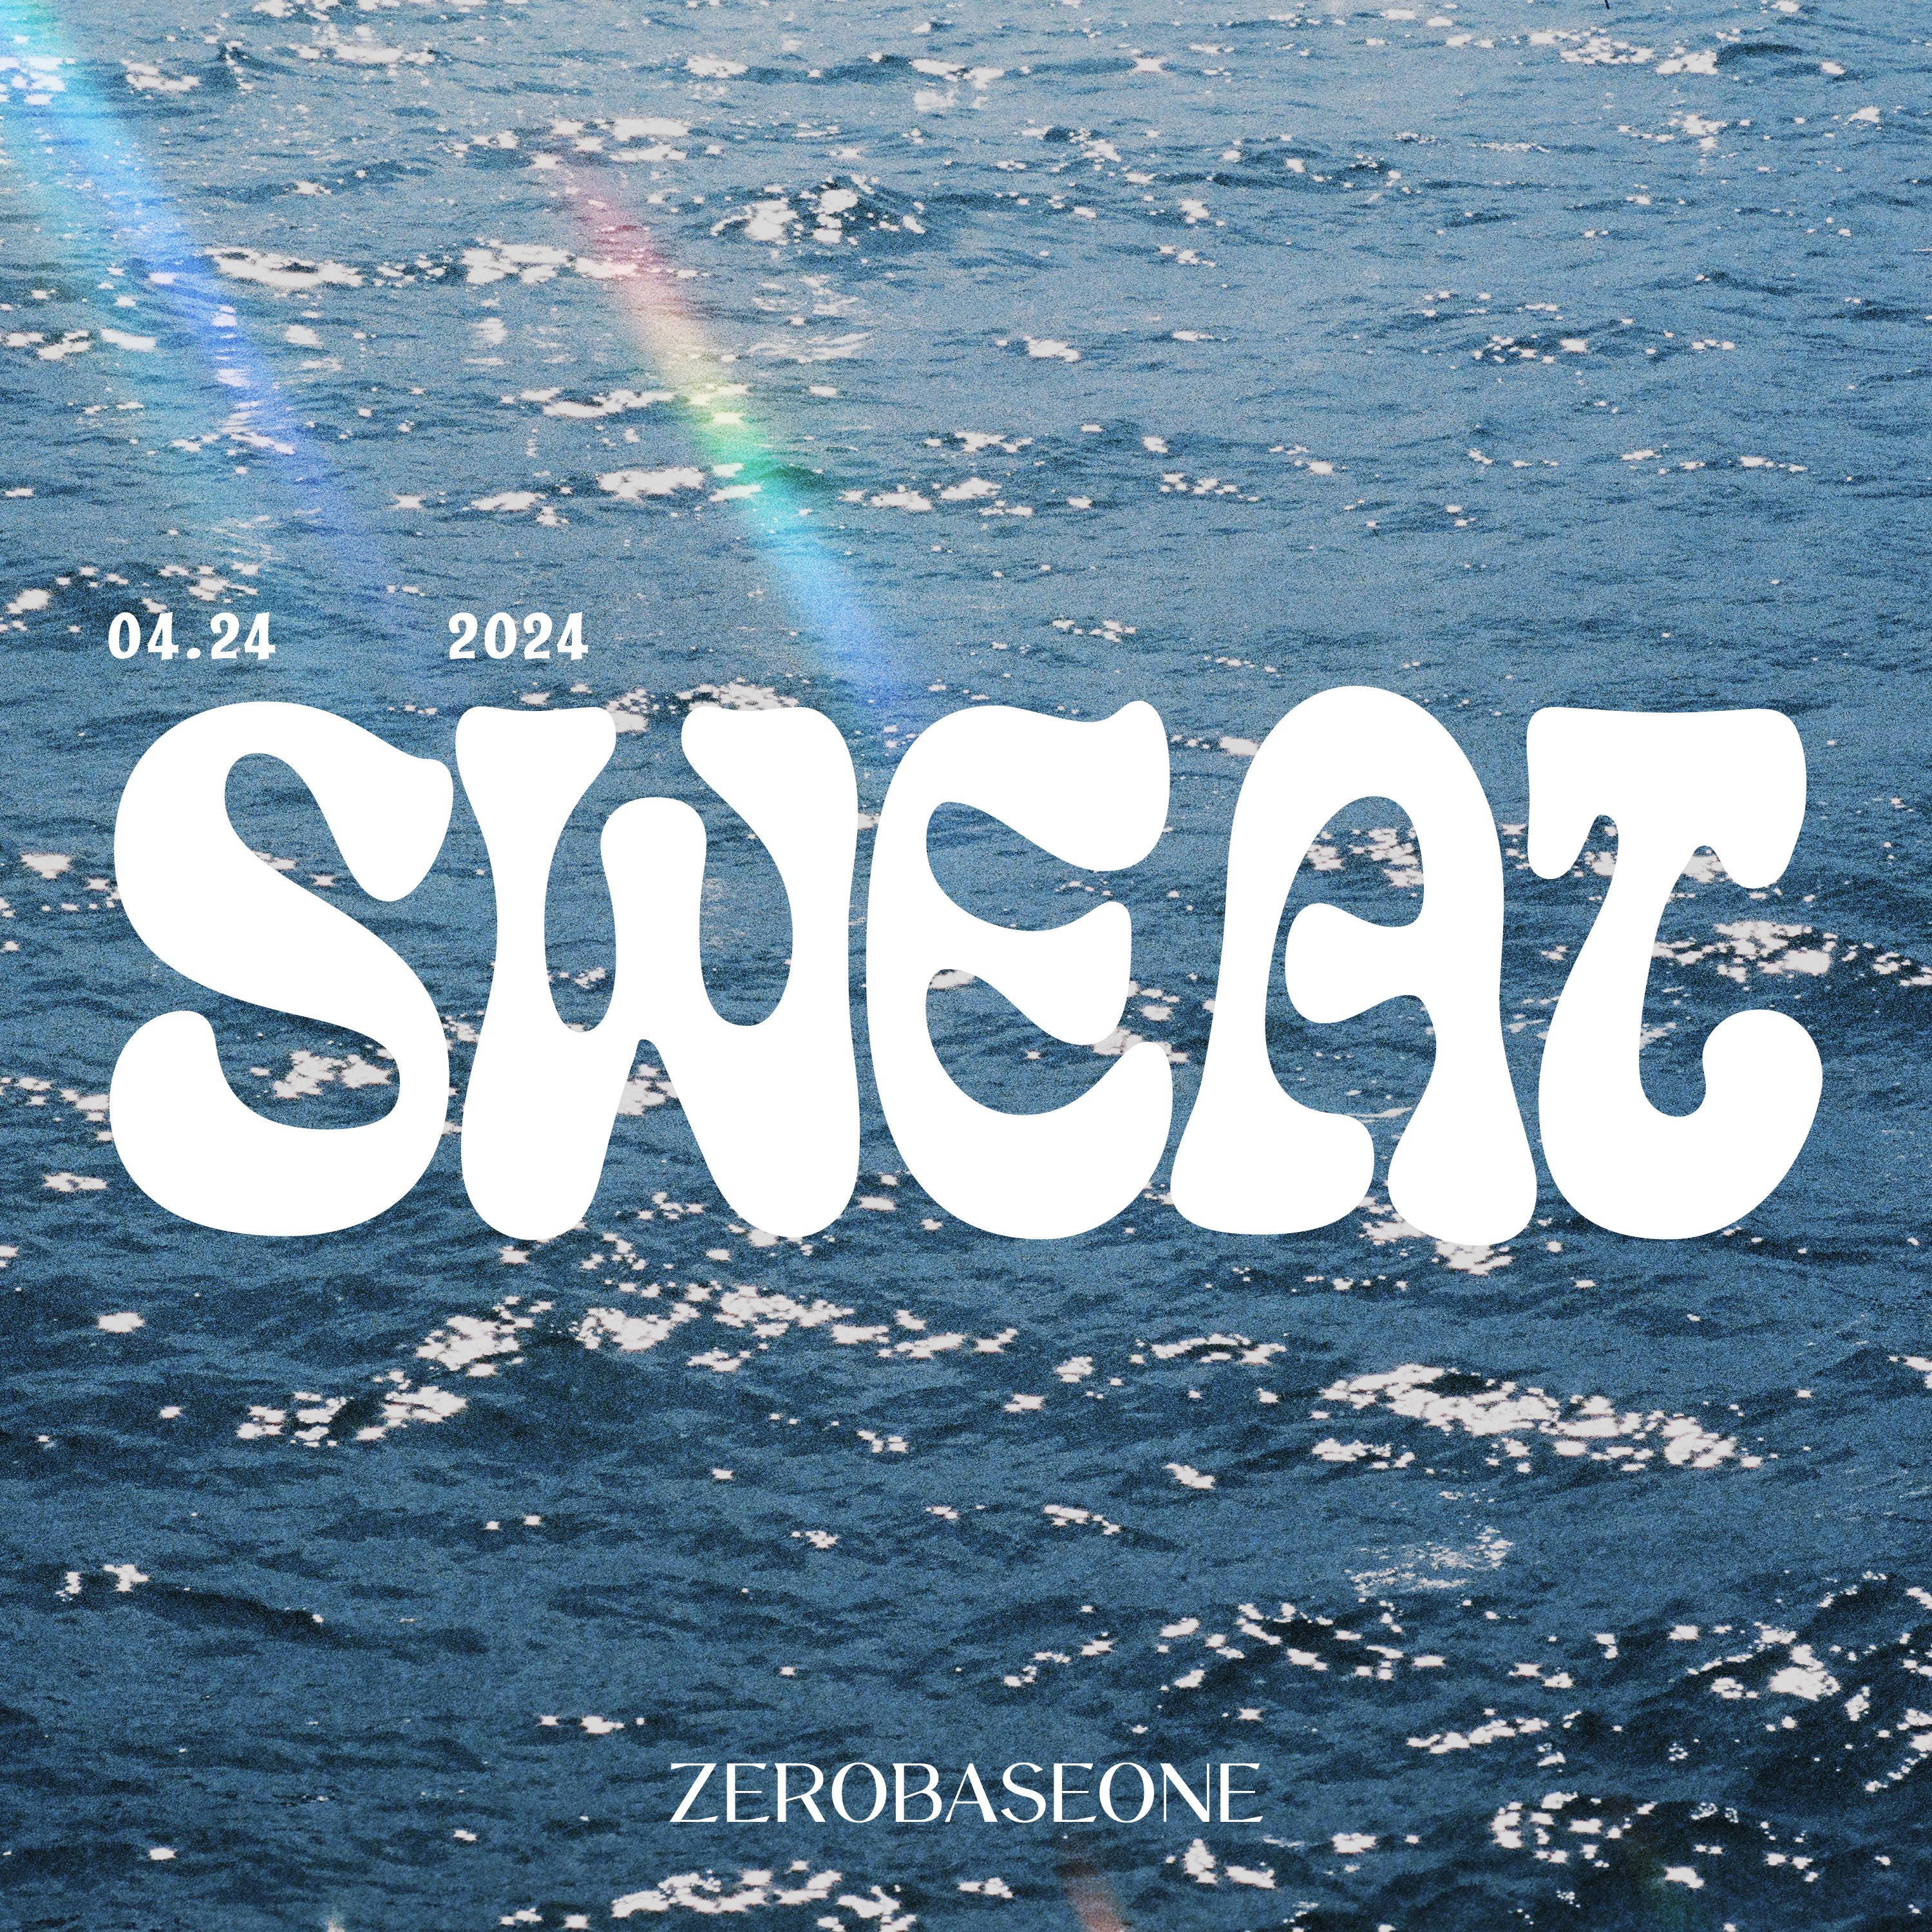 ZEROBASEONE Confirms April Return With Pre-Release Single 